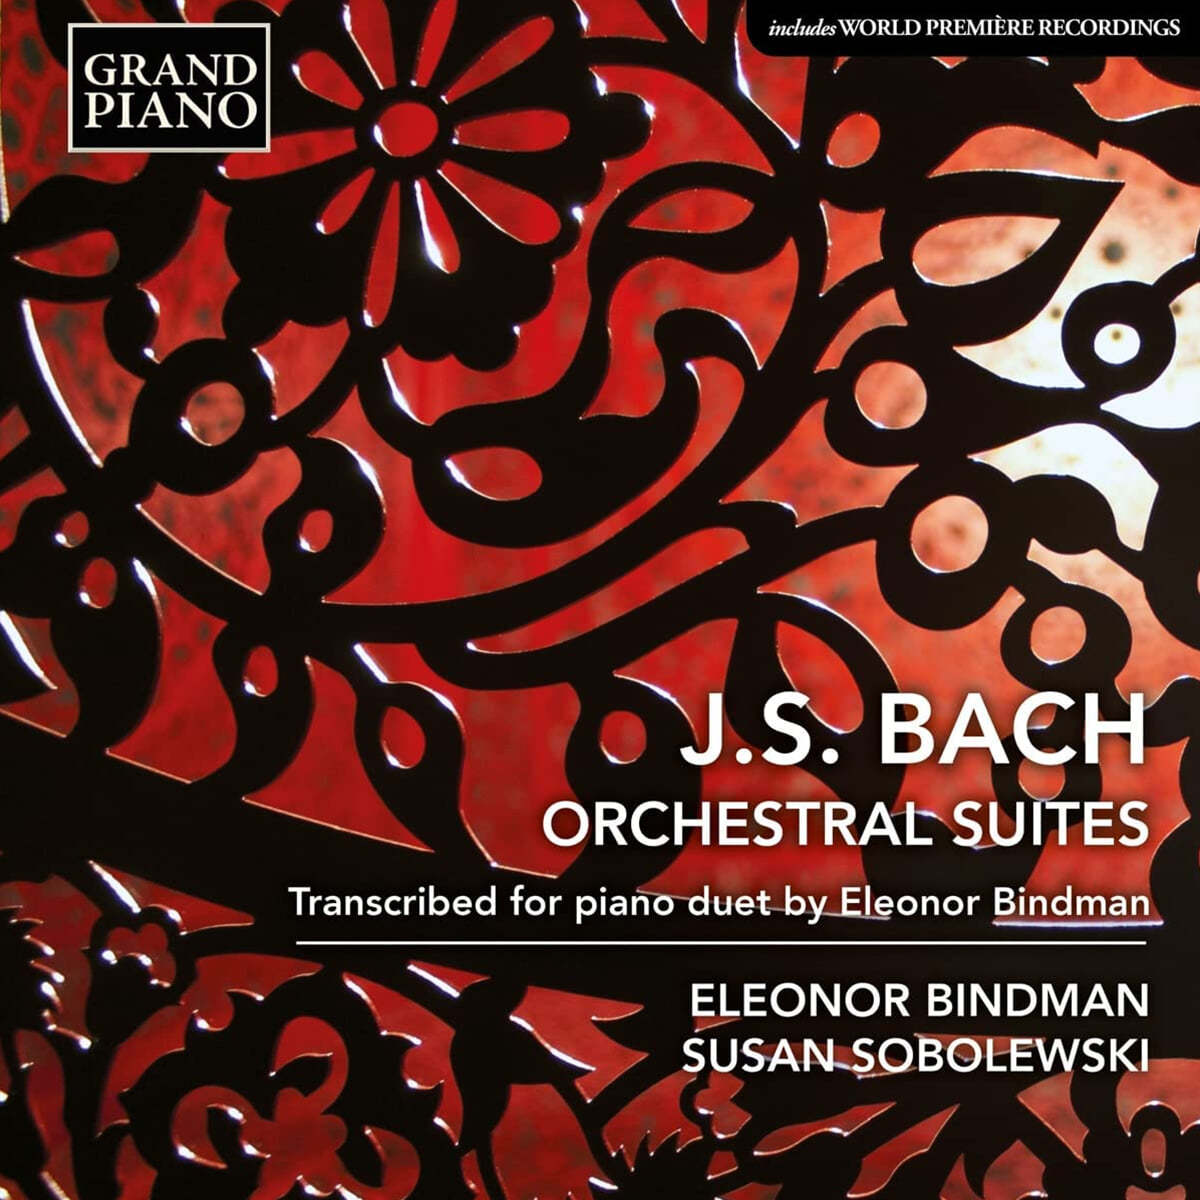 Eleonor Bindman / Susan Sobolewski 바흐: 관현악 모음곡 1~4번 [피아노 이중주 버전] (J.S. Bach: Orchestral Suites)